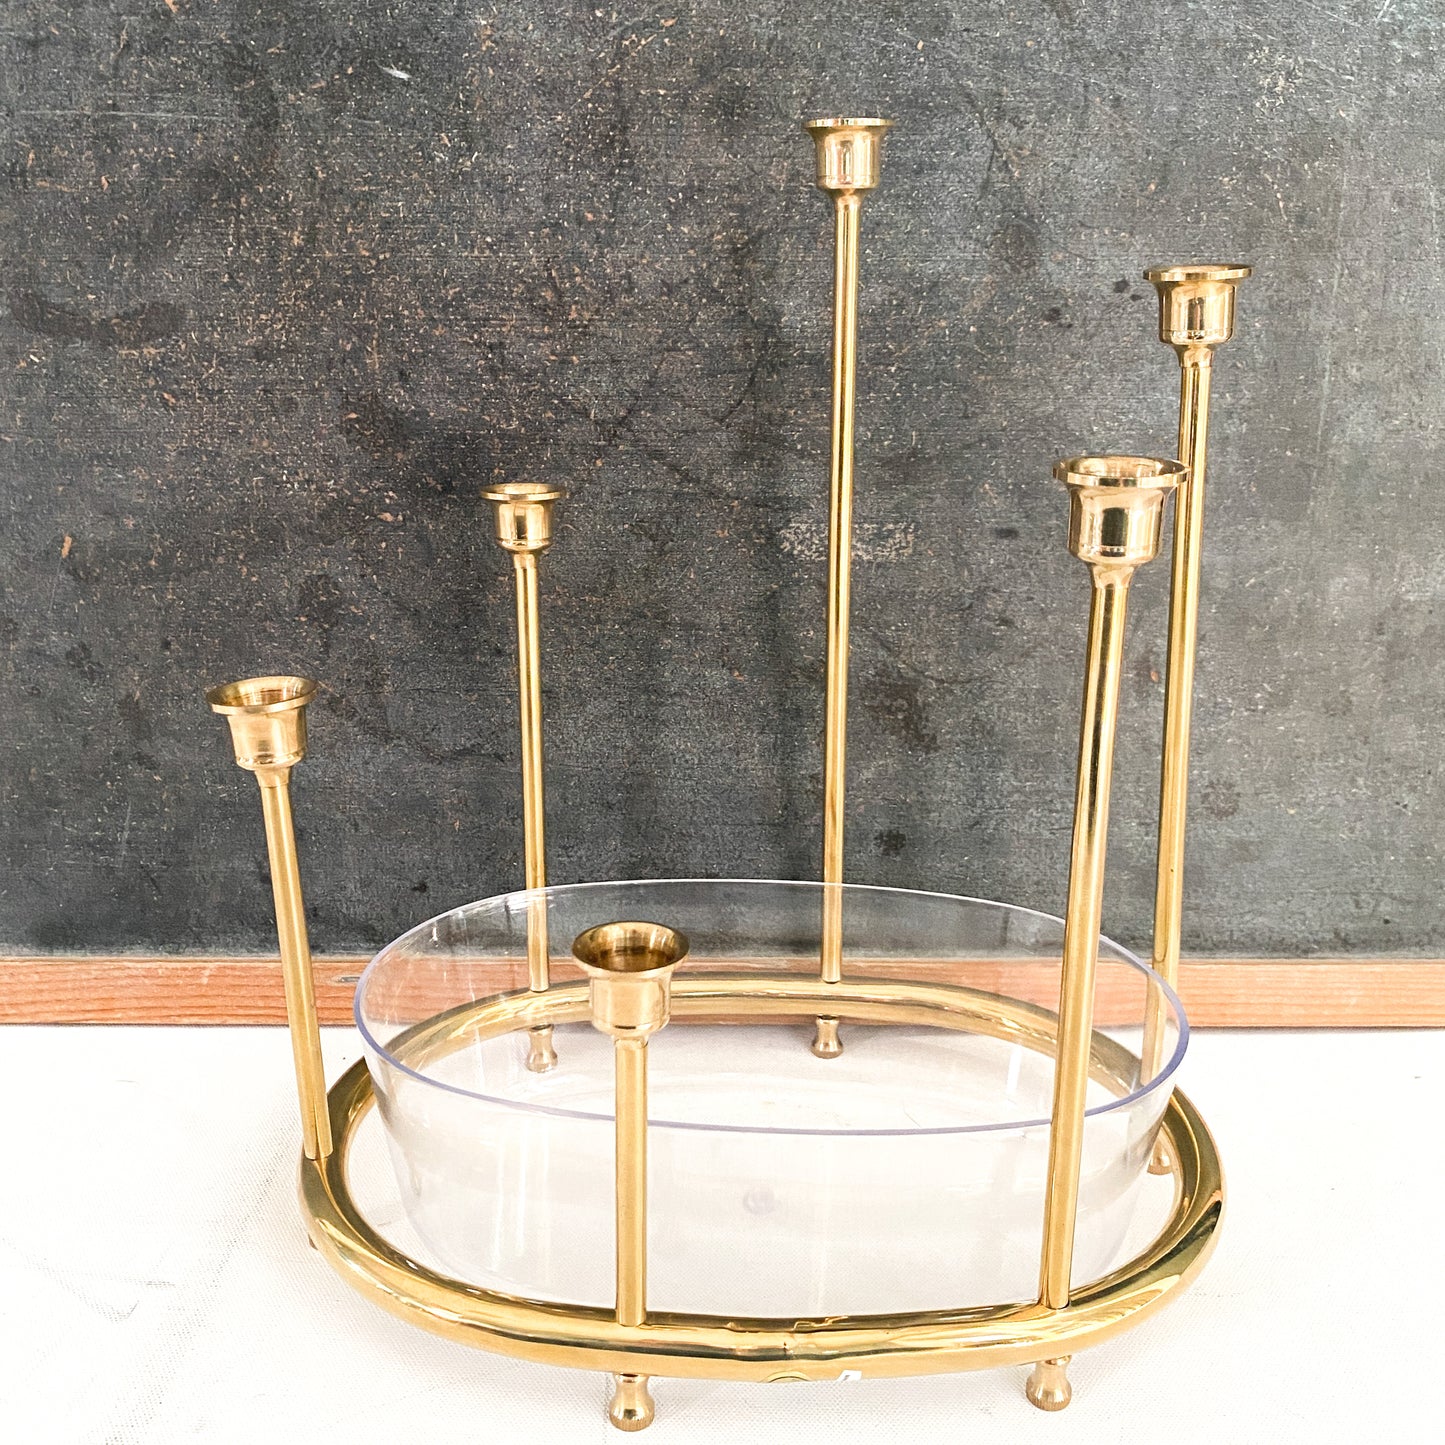 Vintage Brass Candleholder Centerpiece, MCM graduated candle holder